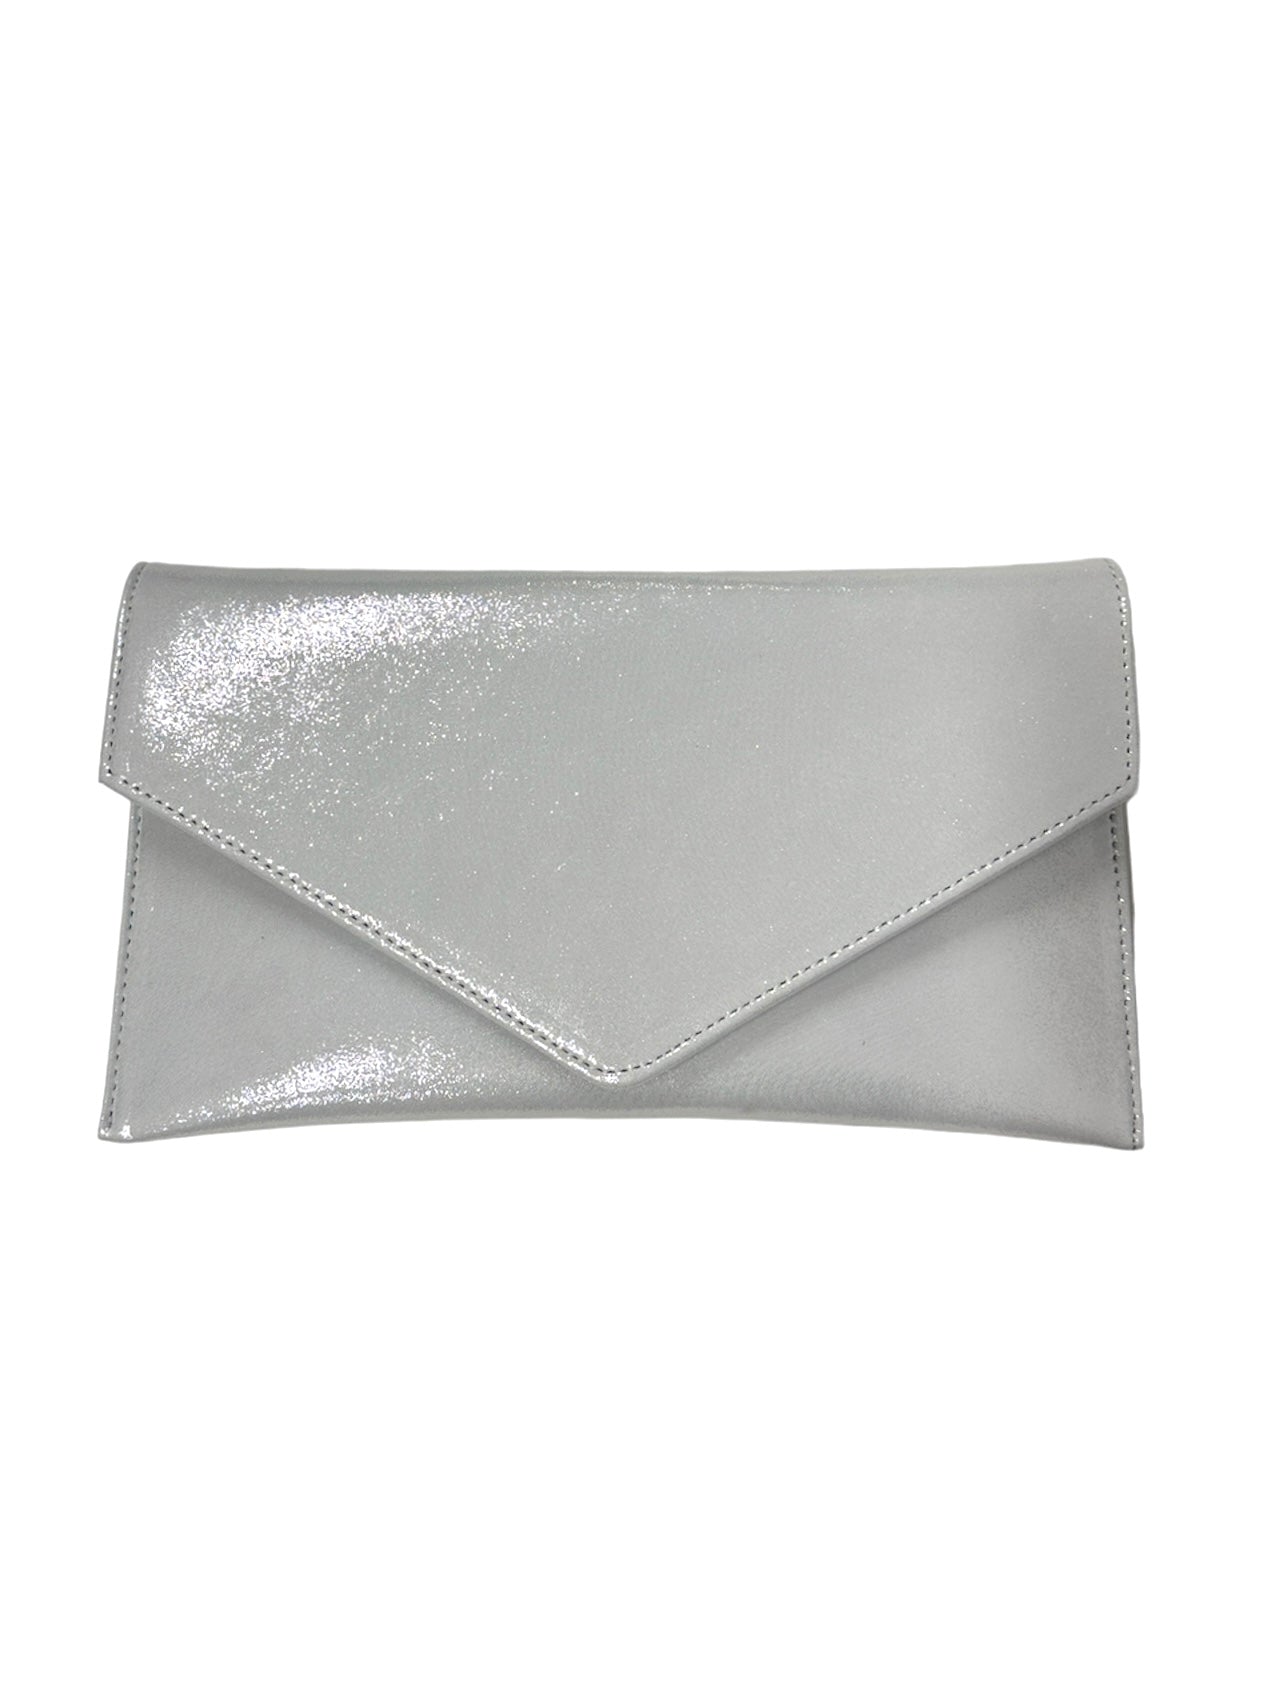 White/Silver Shimmer Clutch Bag